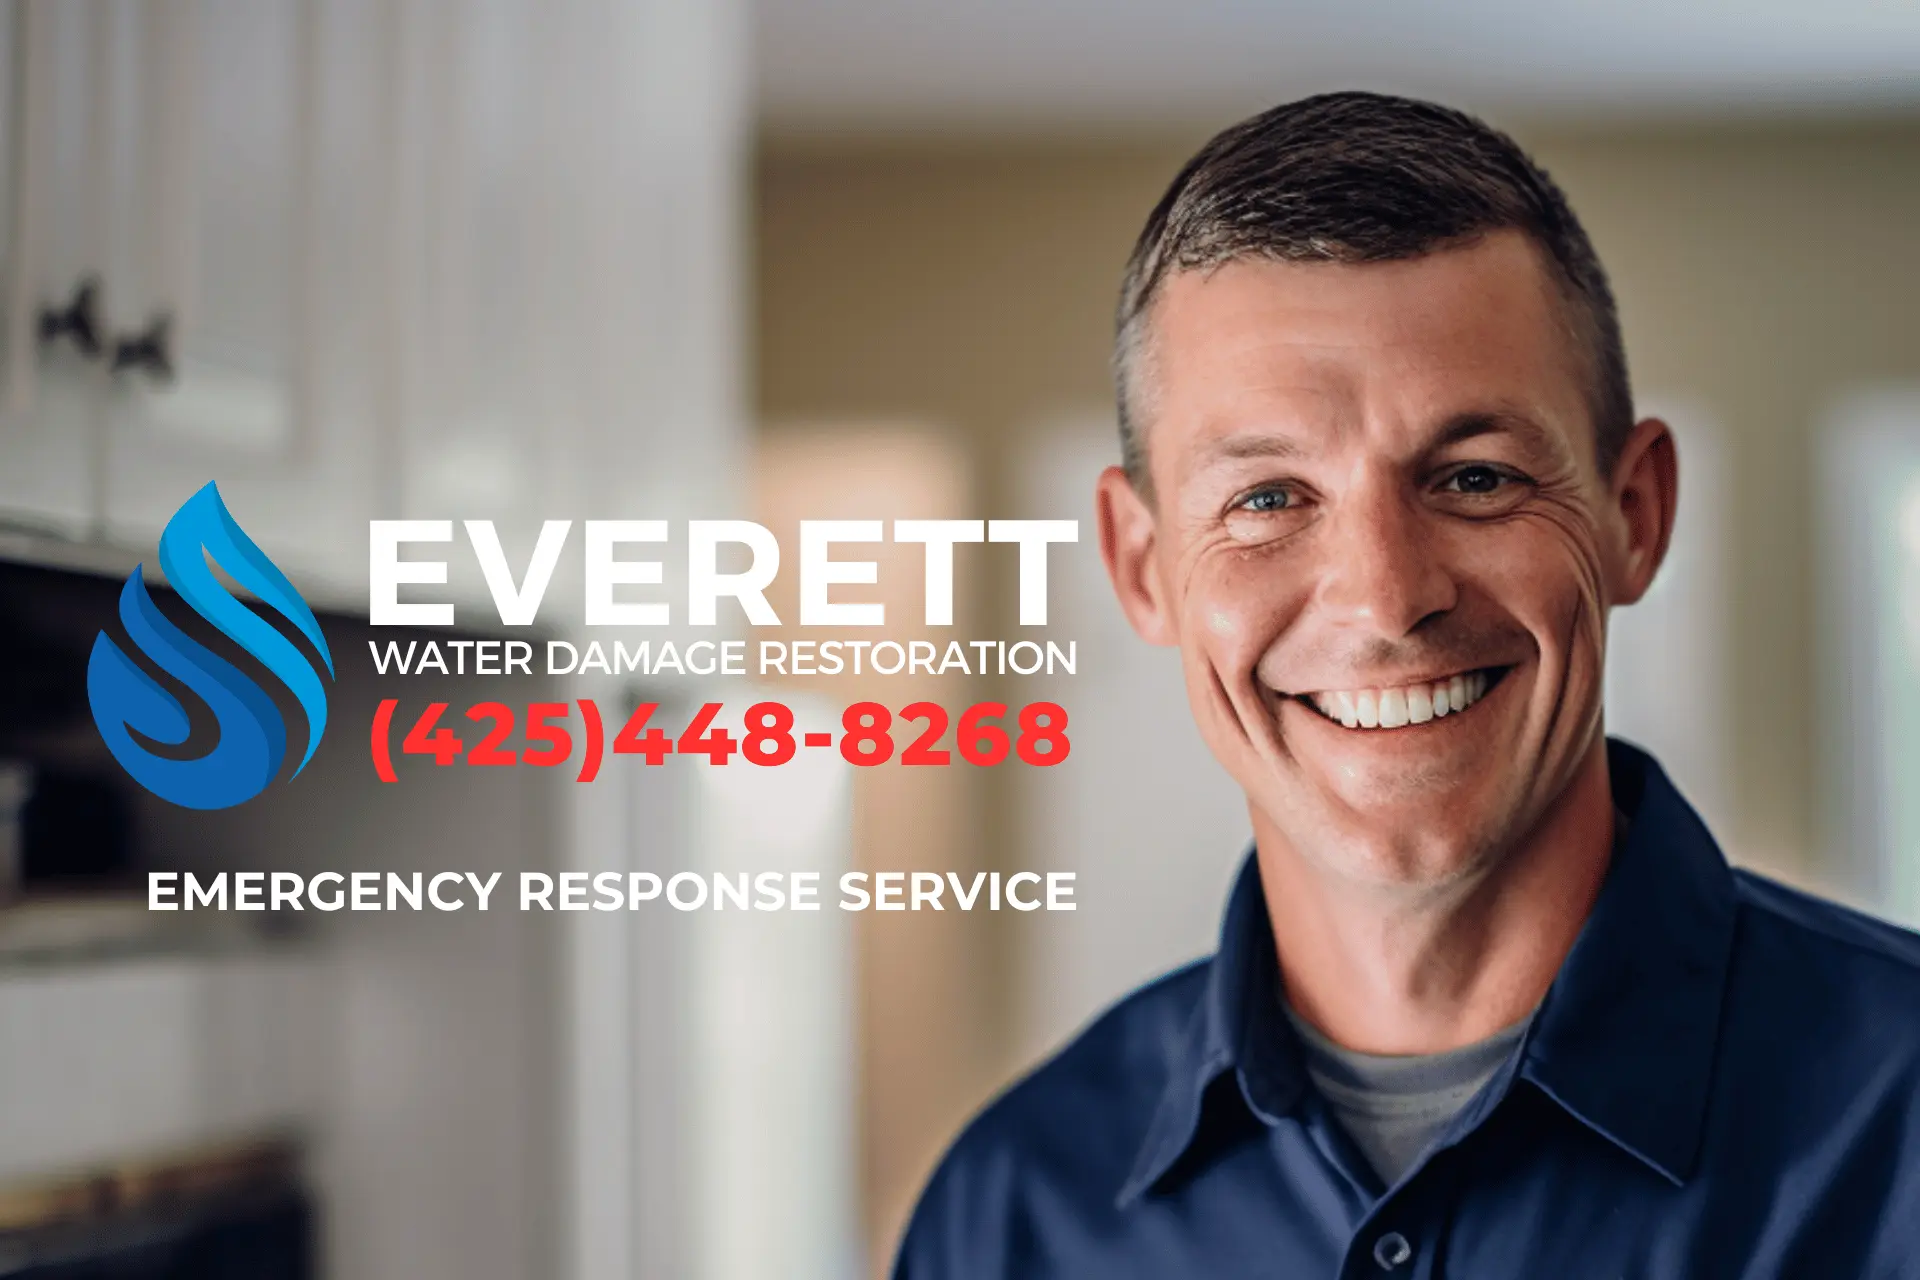 Emergency Response Service - Everett Water Damage Restoration